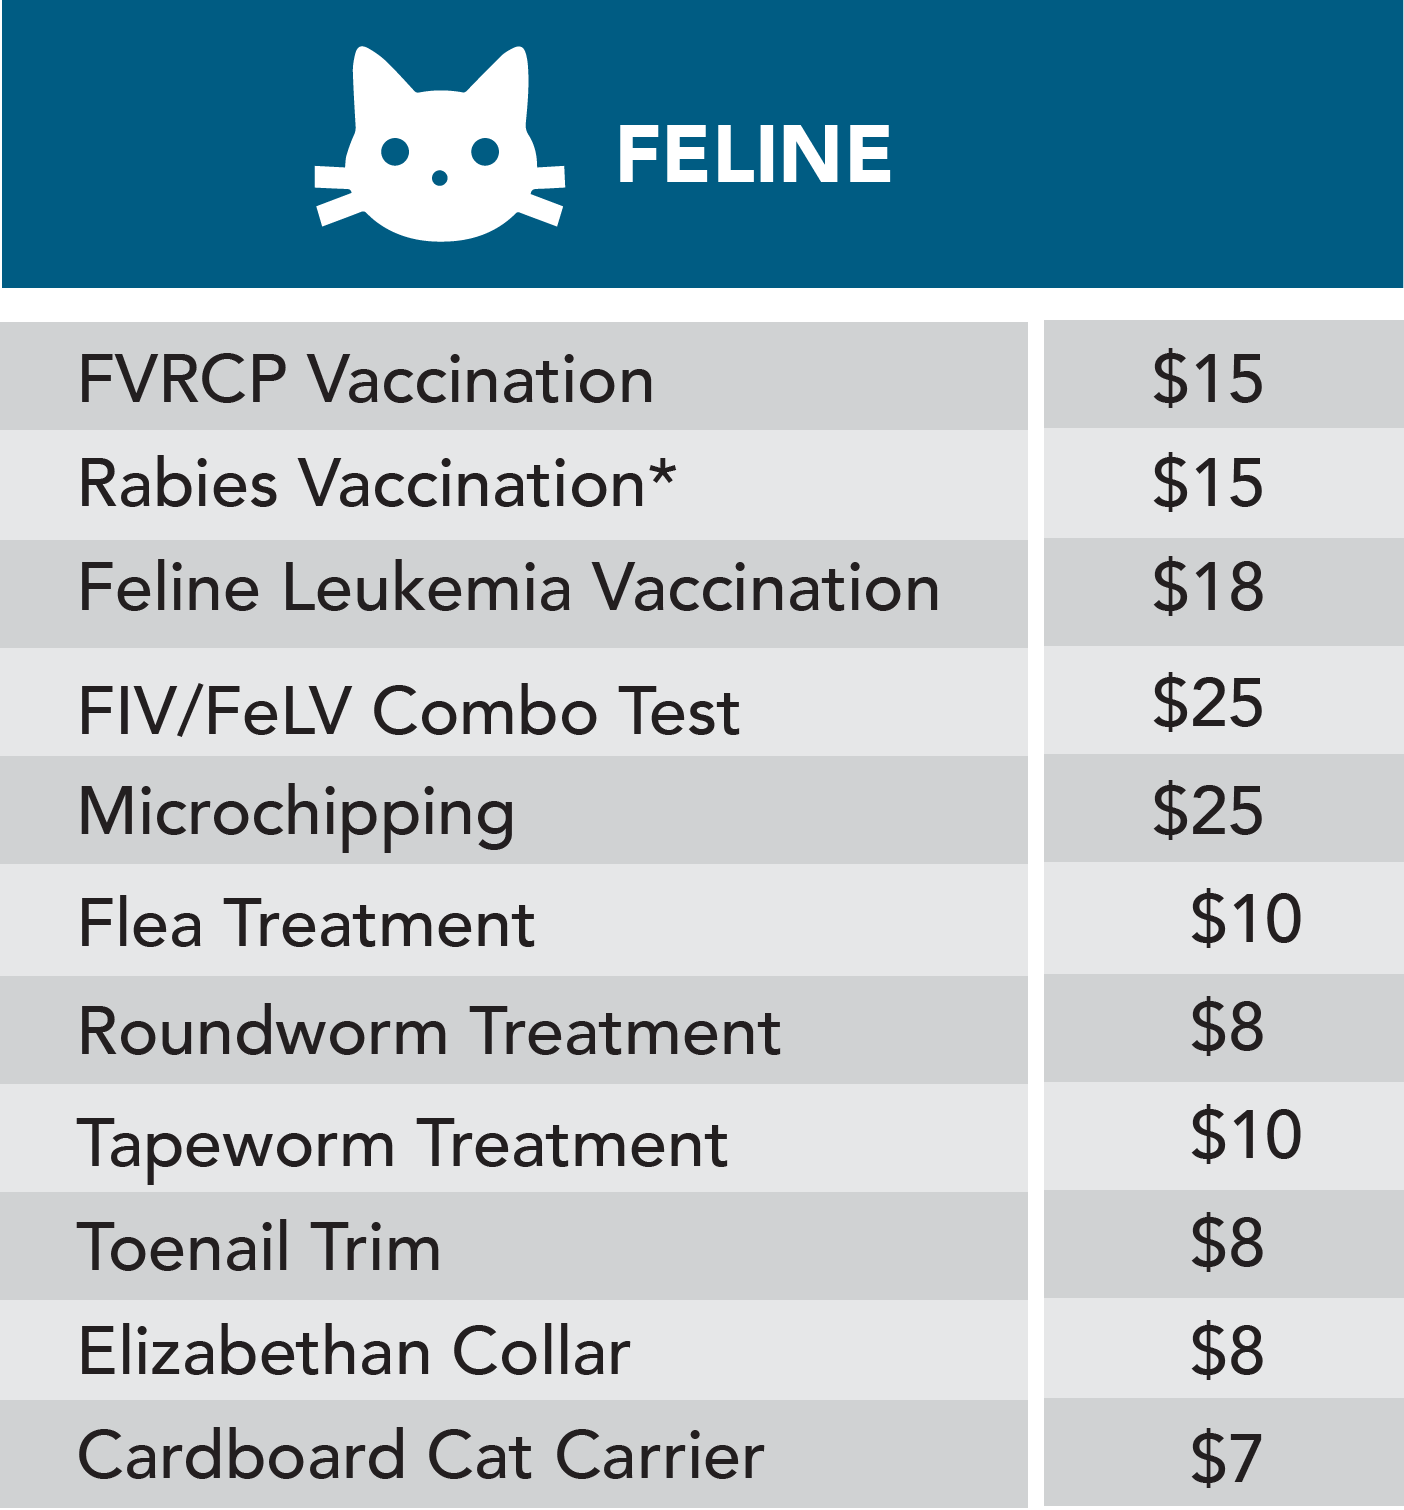 Feline fees